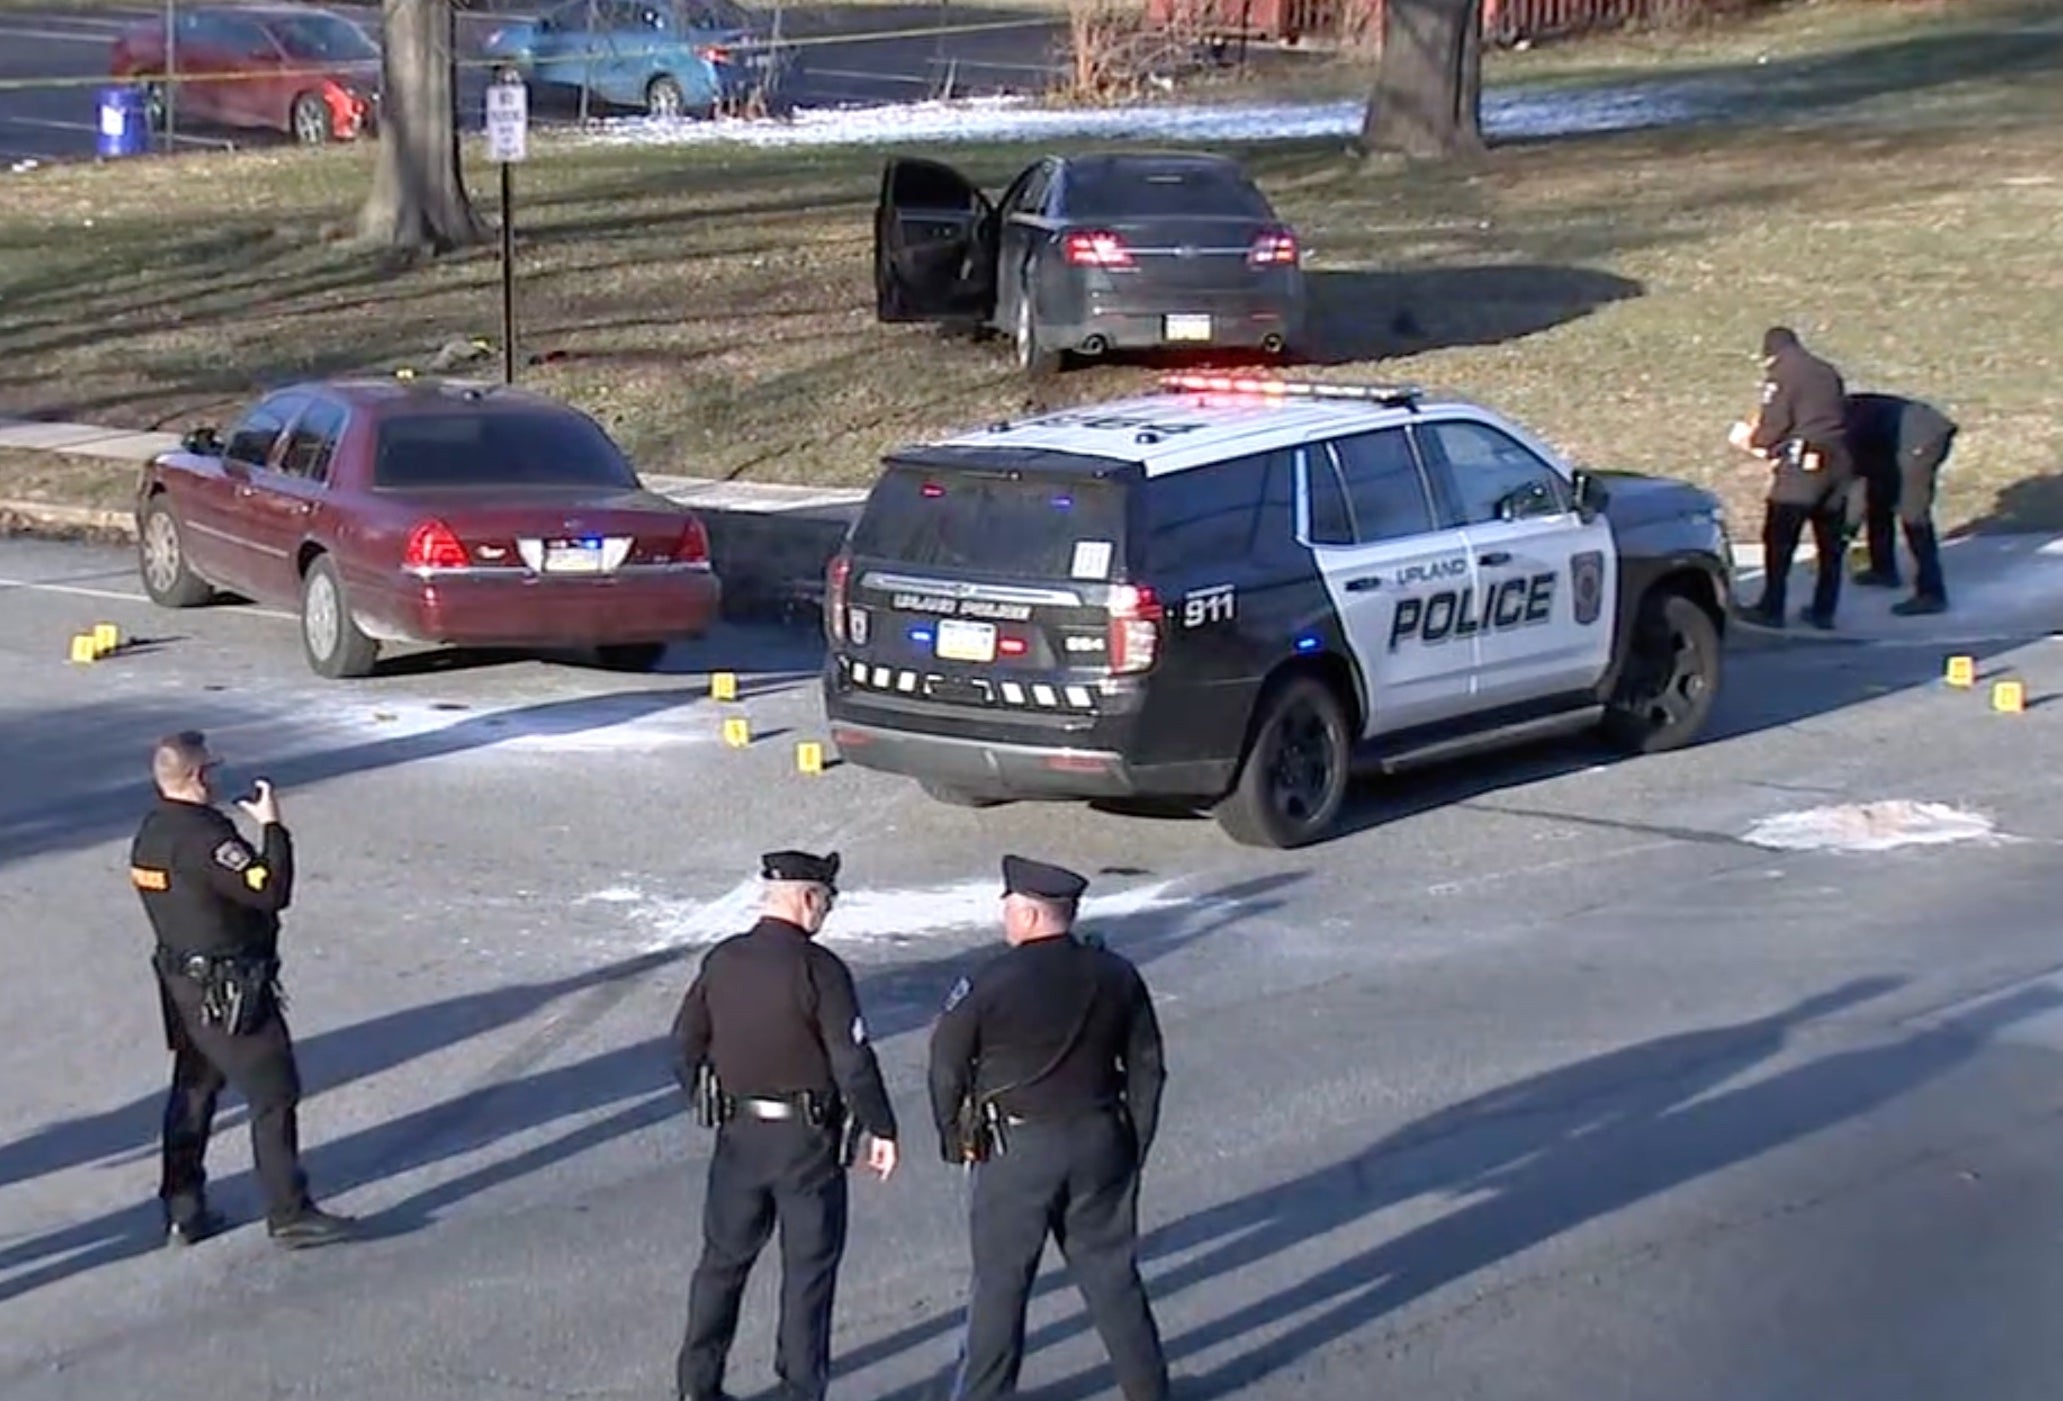 Police officer shot, injured in Delaware County after short pursuit